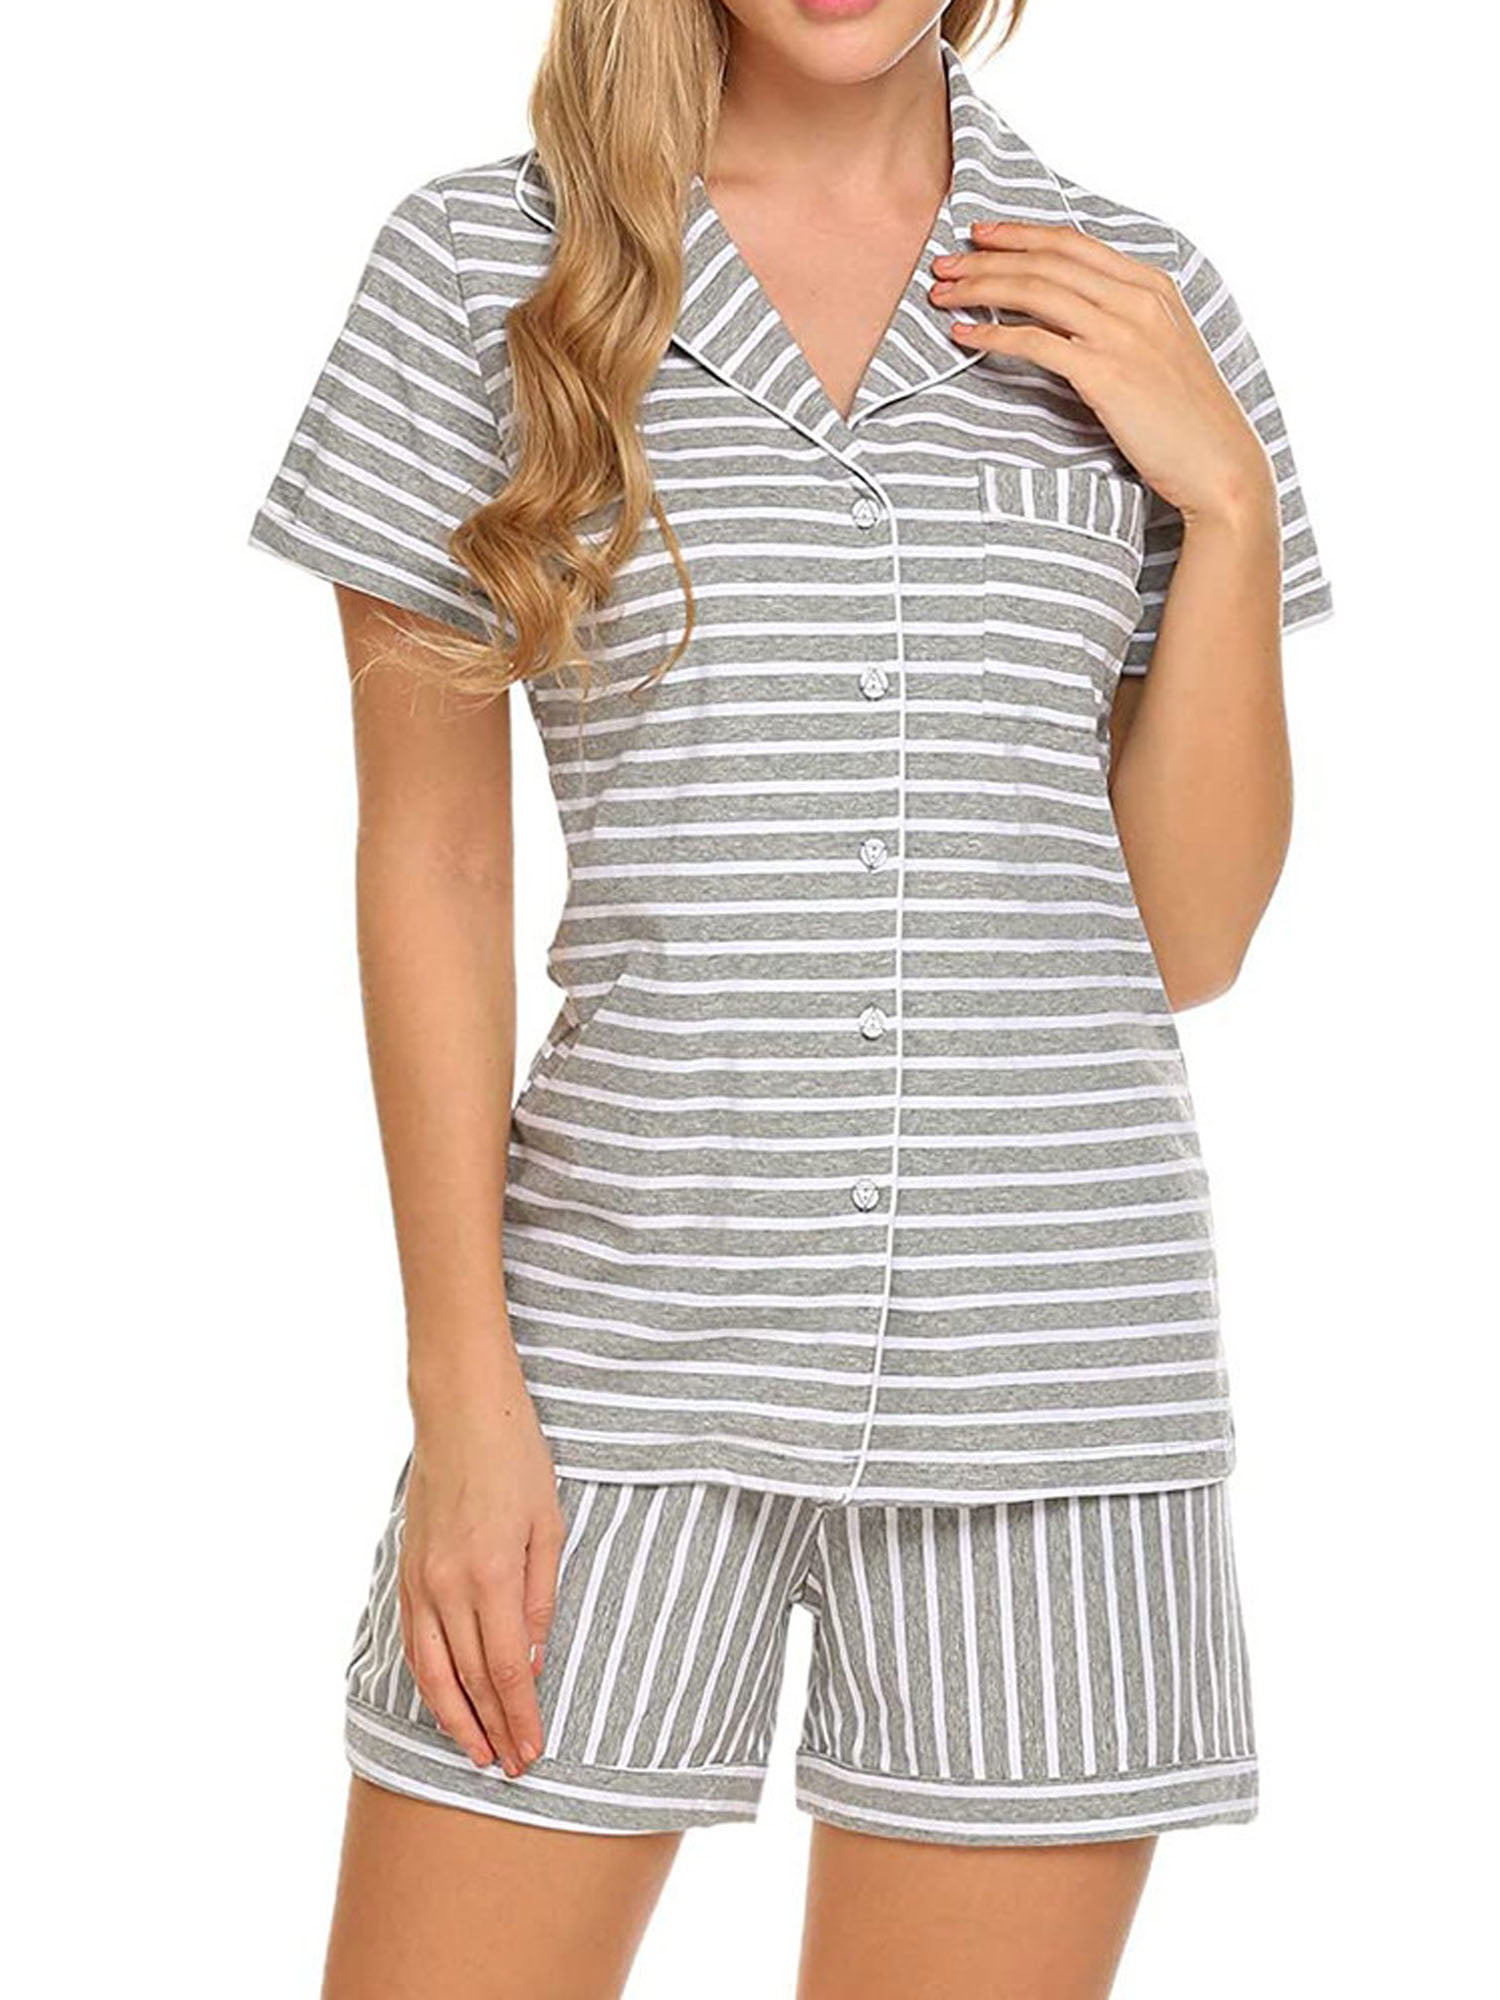 YAMTHR Summer Women Pajamas Set Long Sleeve Tops Elastic Drawstring Shorts Pant PJ Set 2 Piece Sleepwear Casual Nightwear